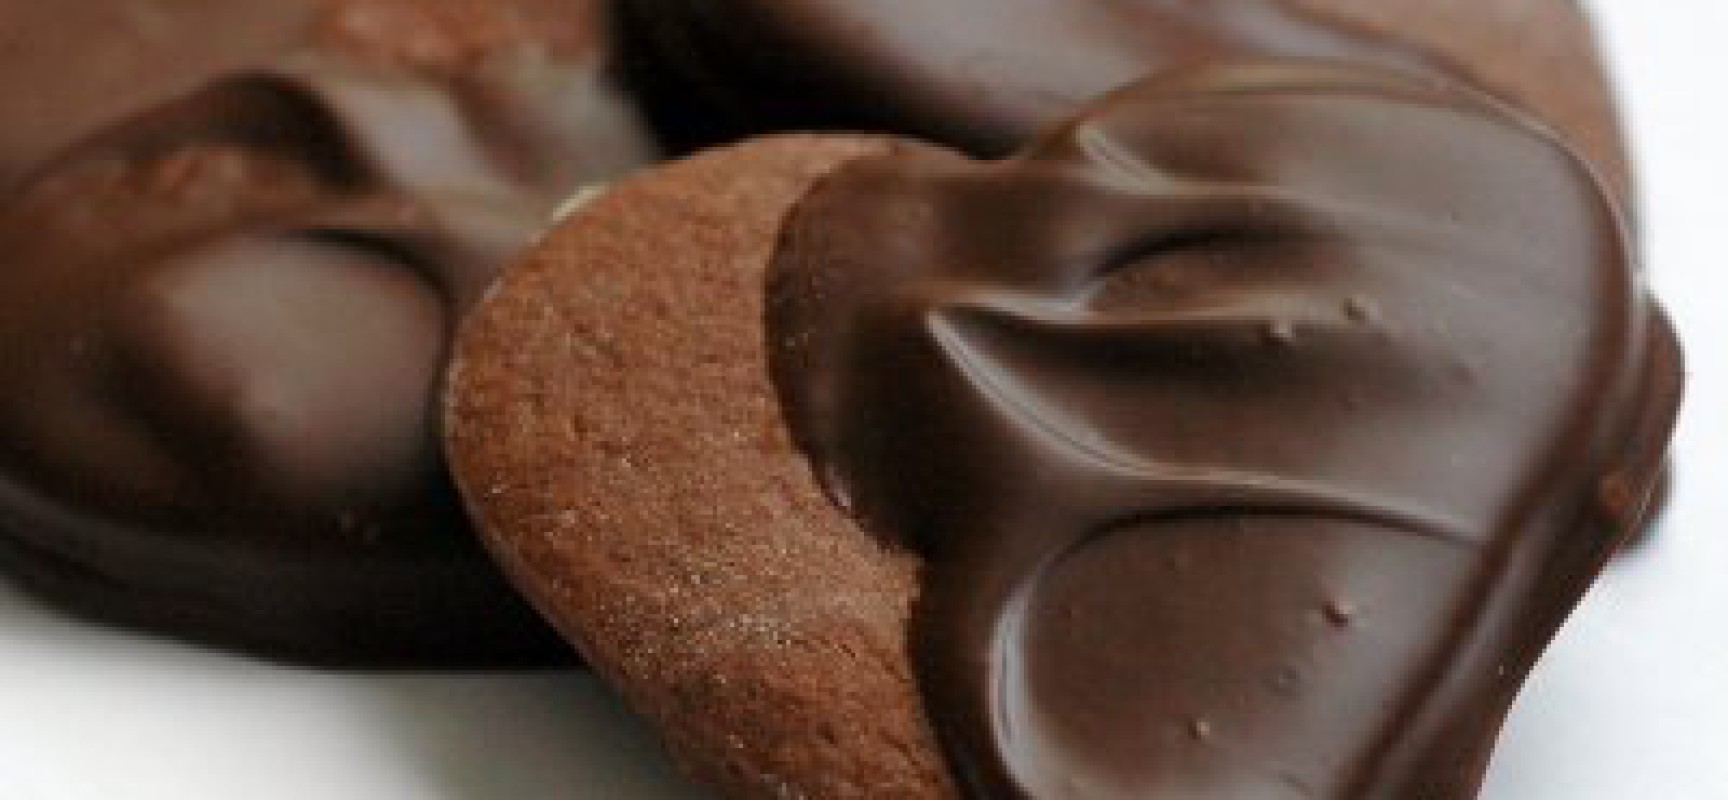 Chocolates, Mmm..mm..Muahhh!